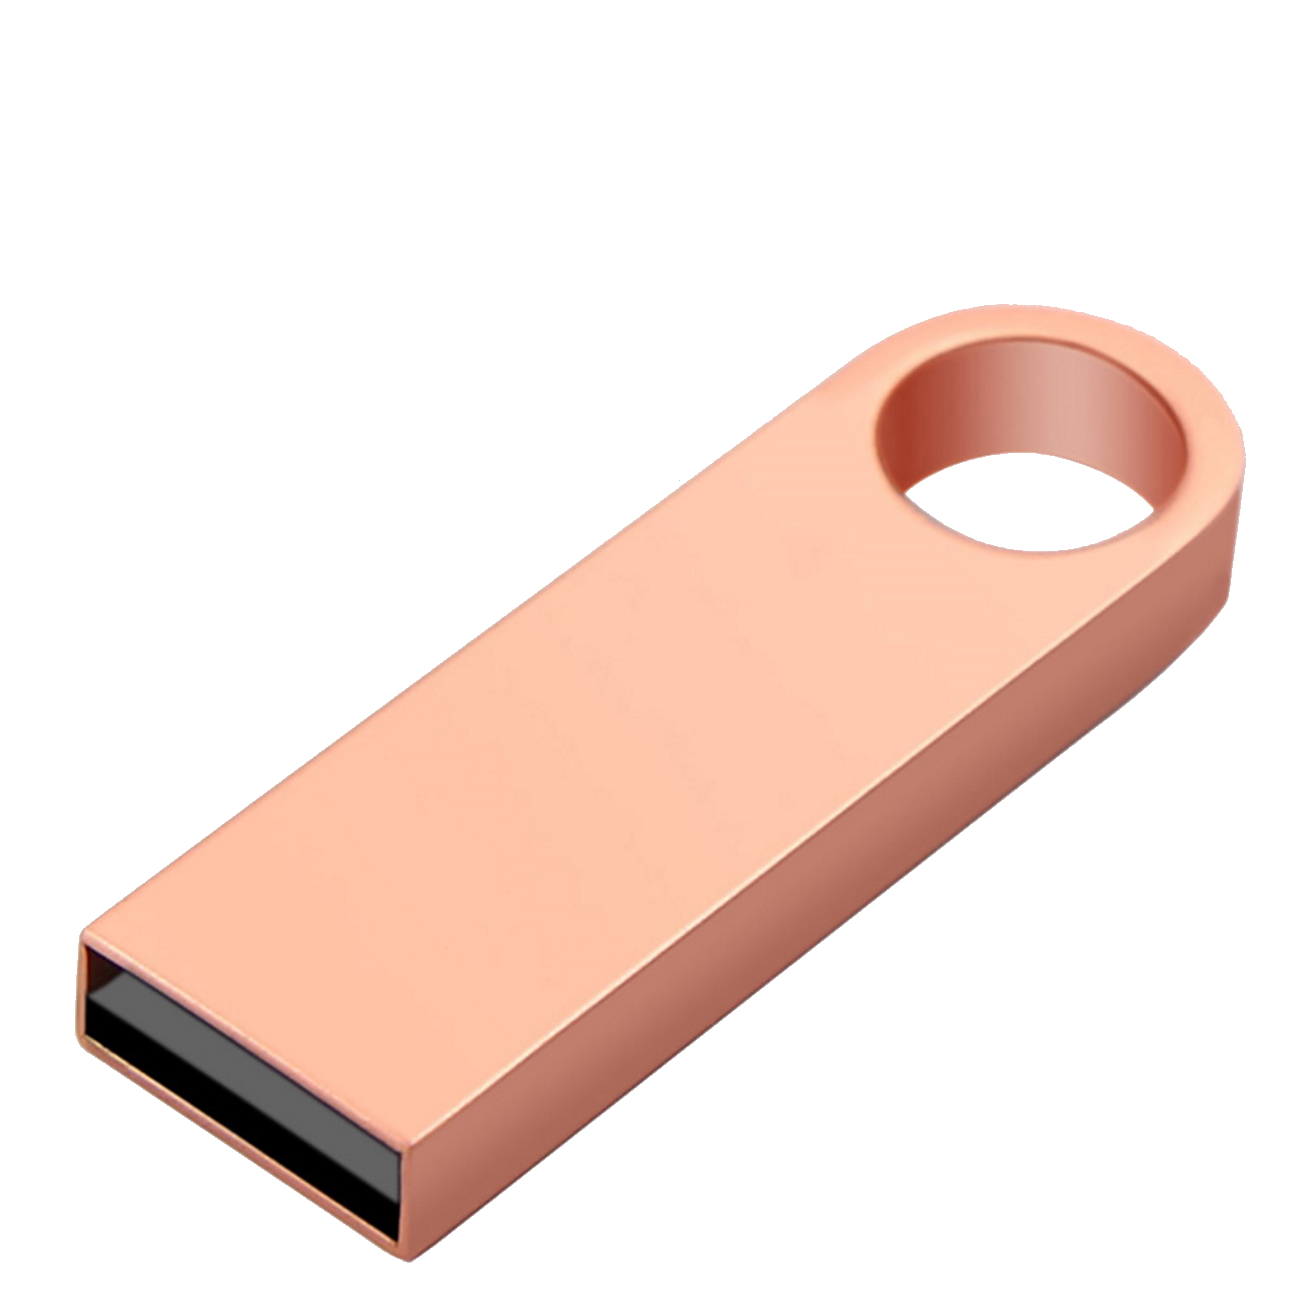 USB GERMANY ® USB-Stick SE09 (Rosegold, 128 GB)